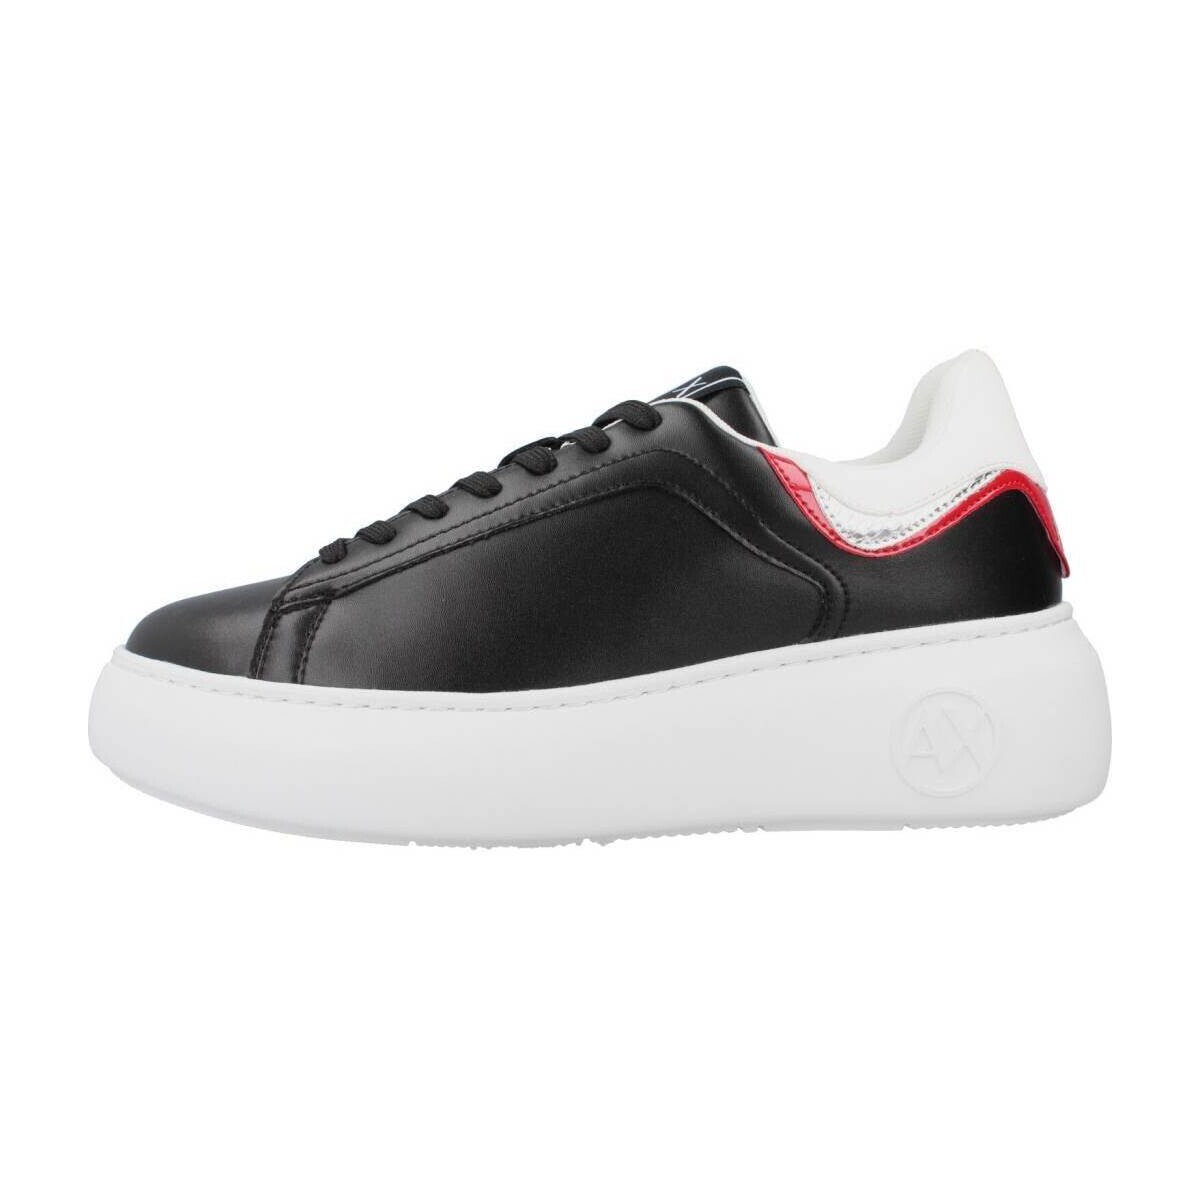 Schoenen Dames Sneakers EAX XDX108 XV731 Zwart